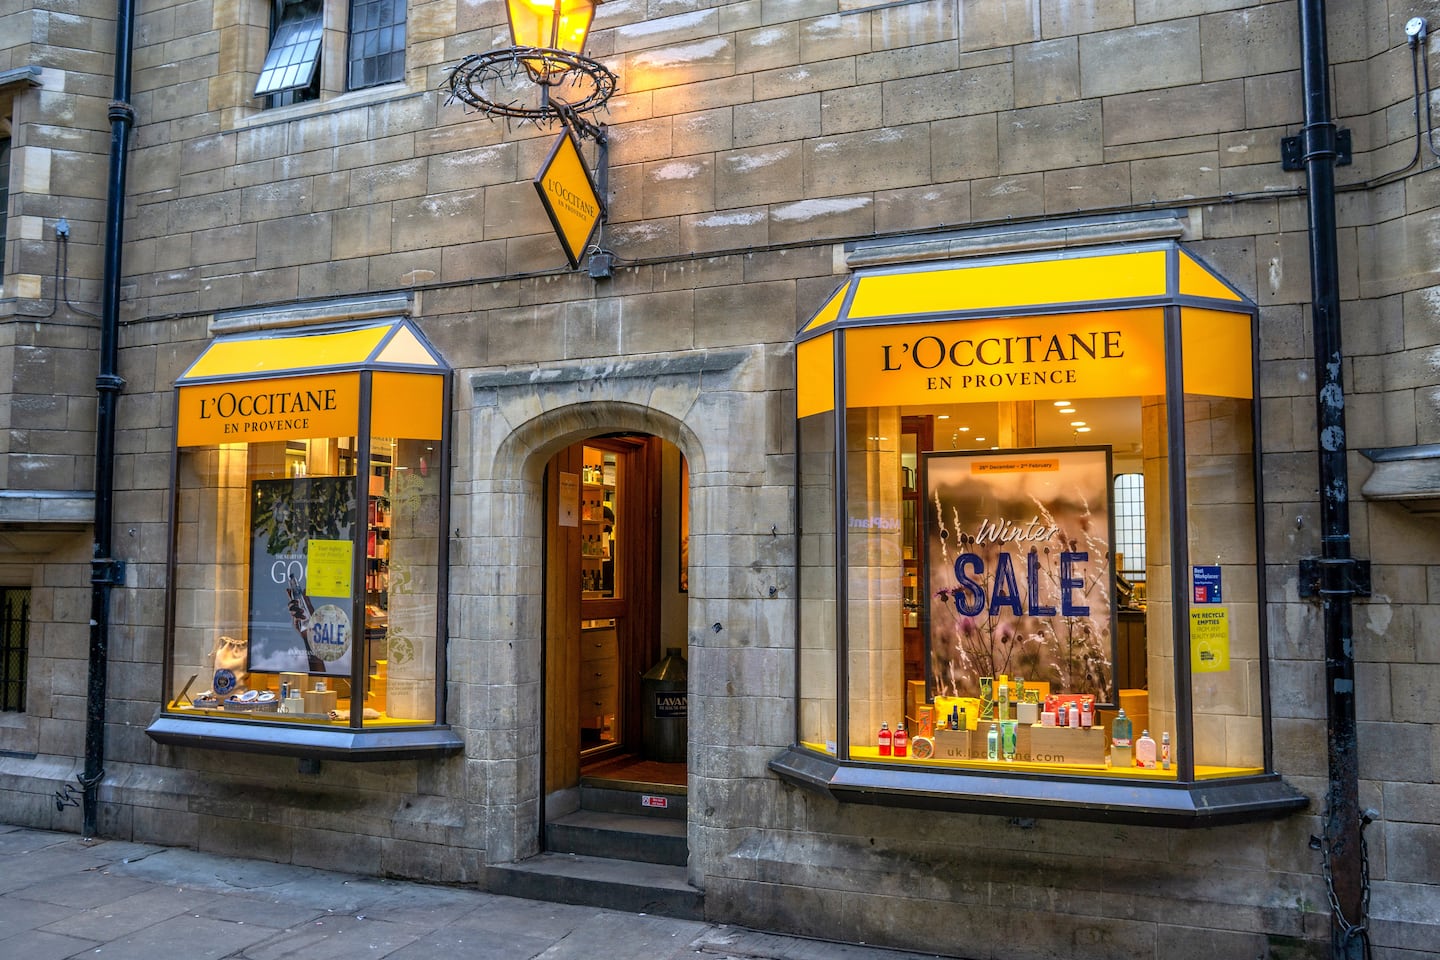 A L'Occitane storefront